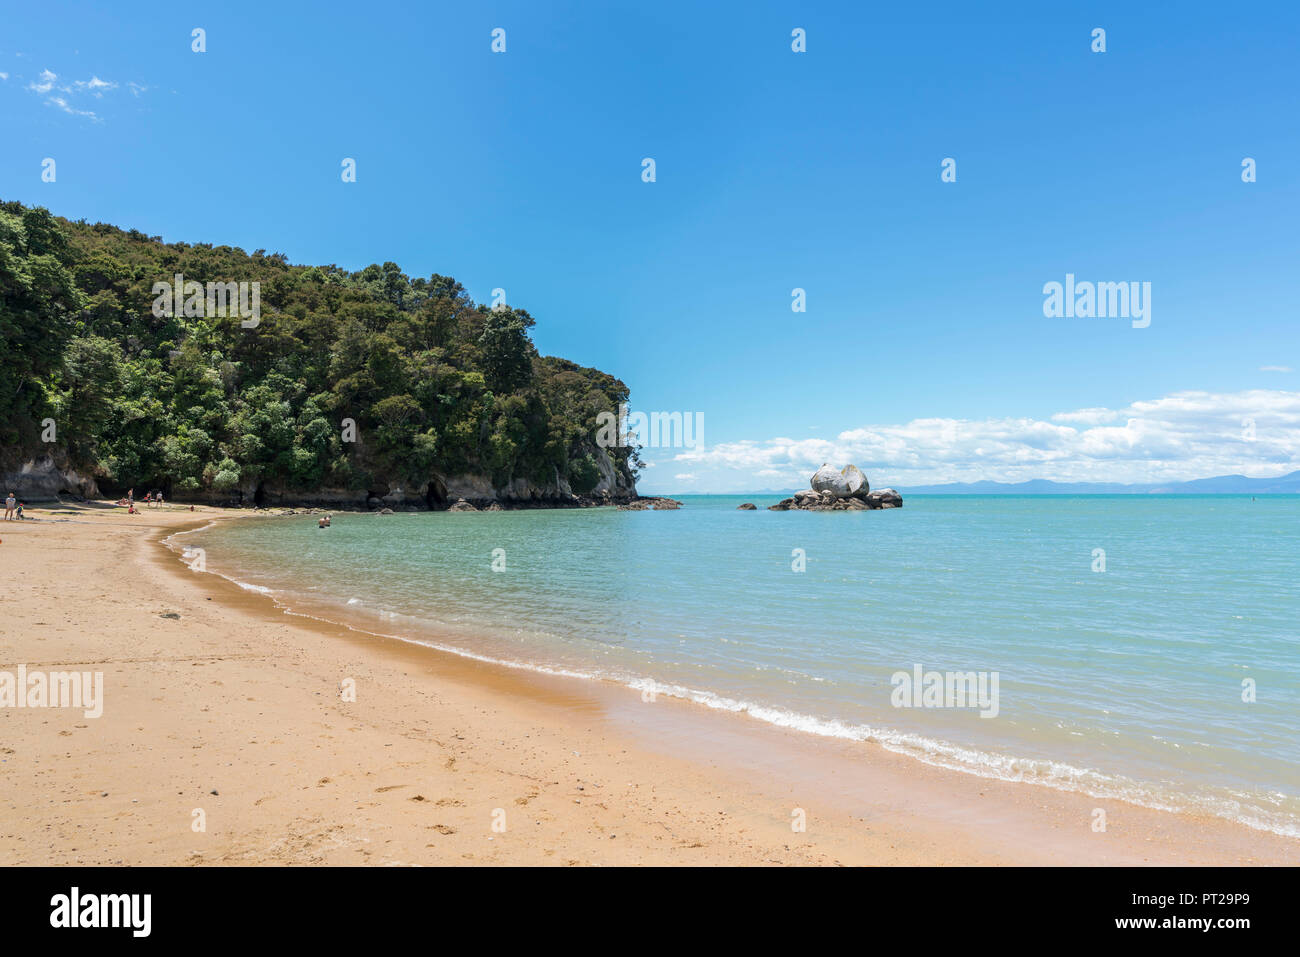 Split Apple Rock and its beach in summer, Kaiteriteri, Tasman region, South Island, New Zealand, Stock Photo